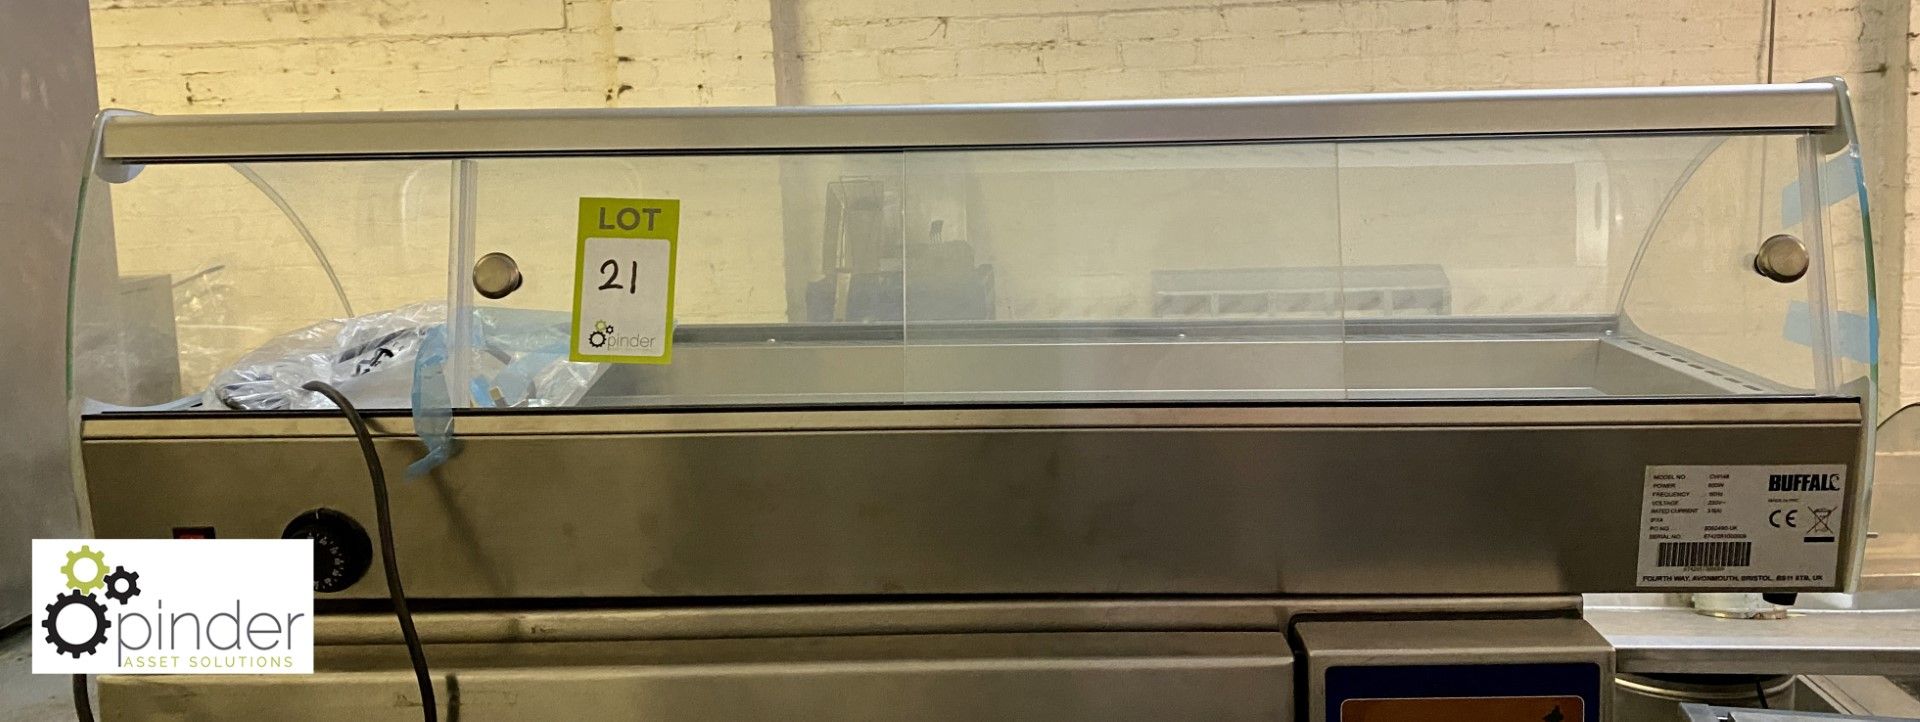 Buffalo CW148 countertop Heated Food Display, 1120mm, 240volts, unused